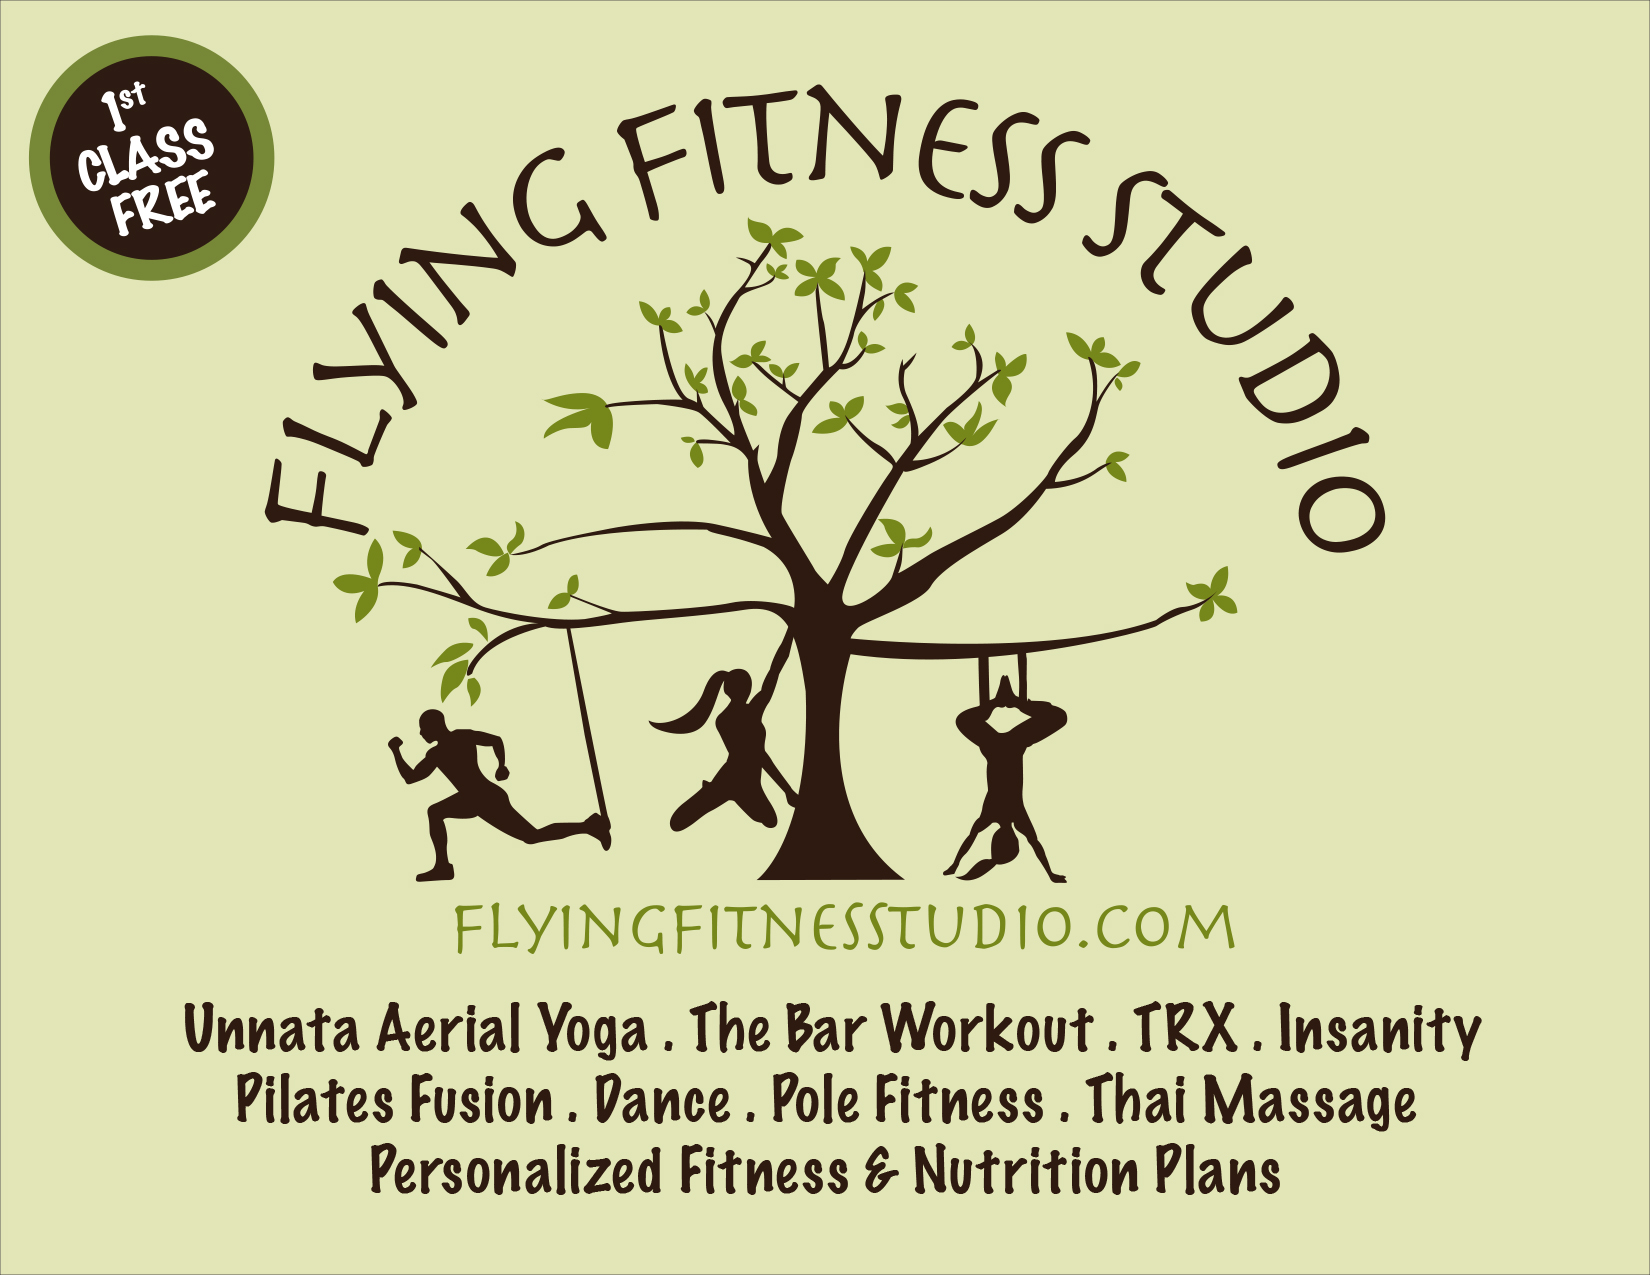 Flying Fitness Studio Flyer (front)